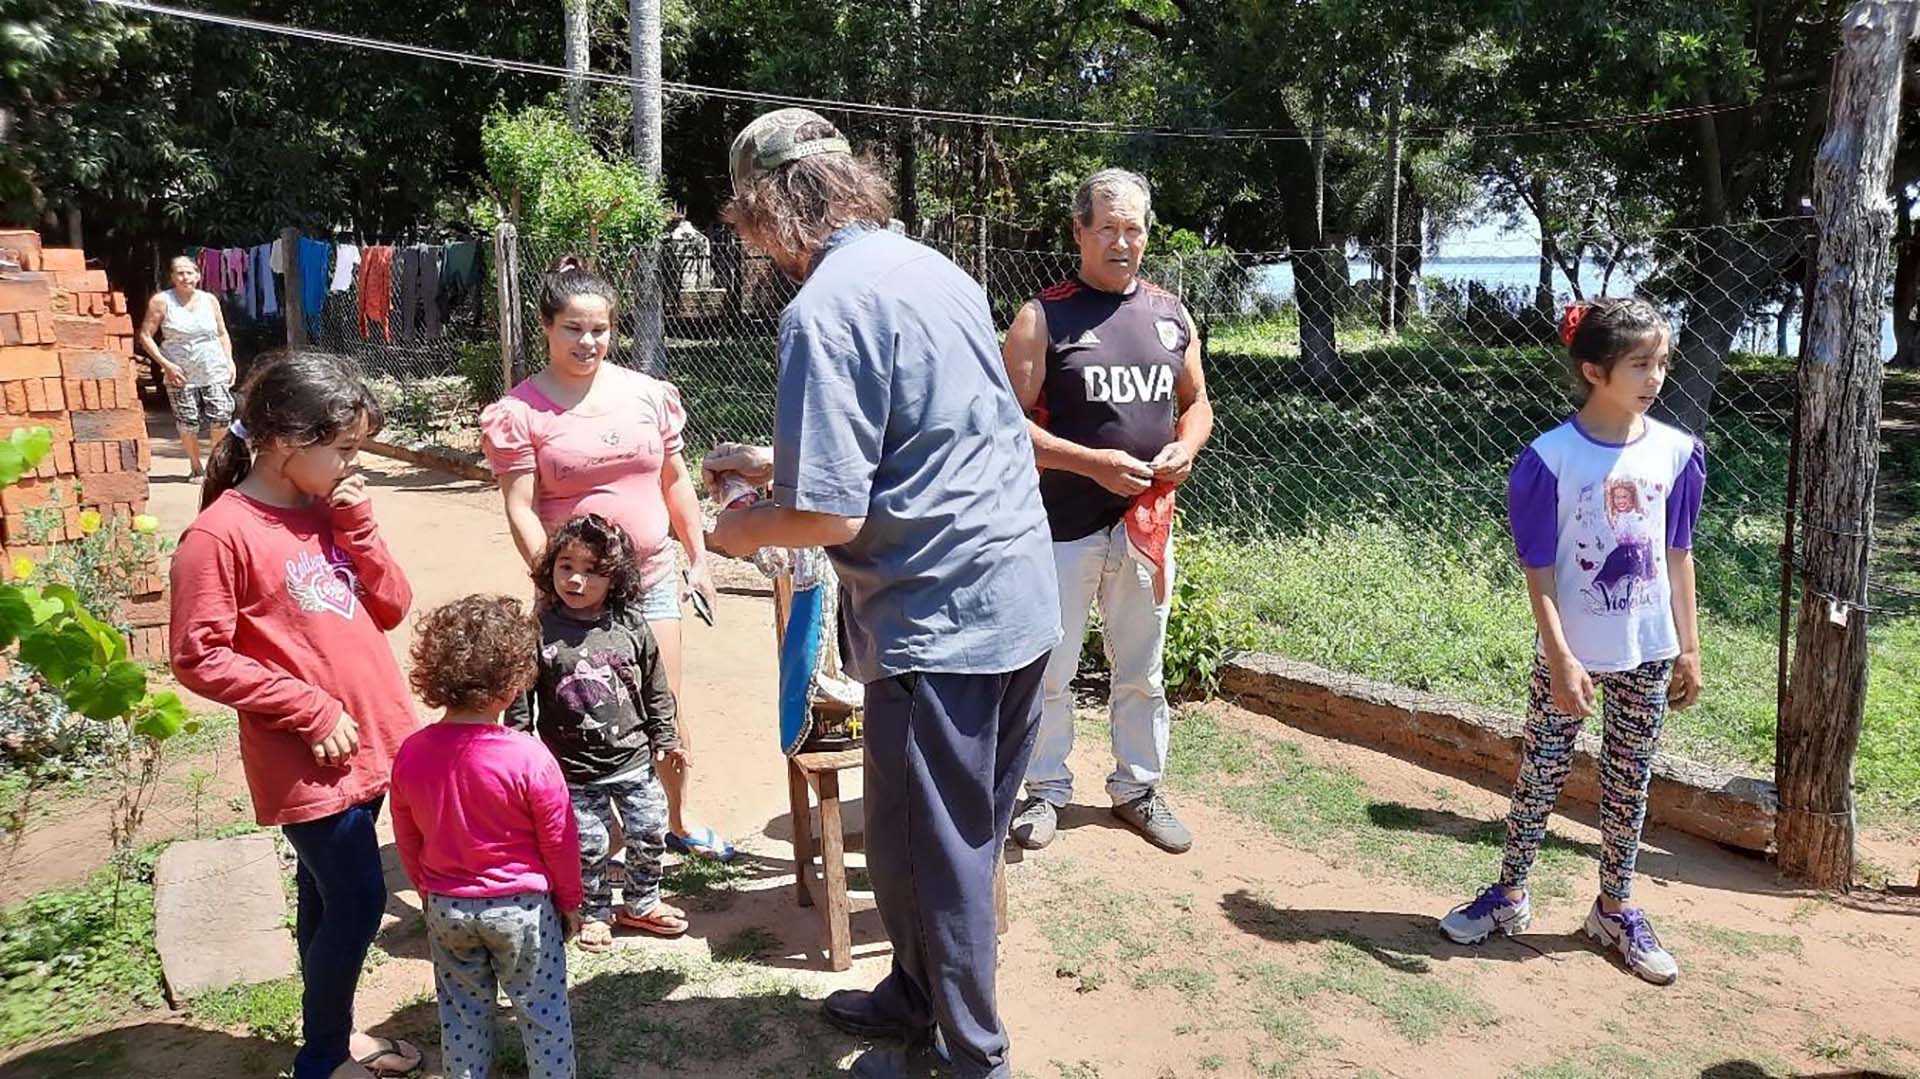 El padre "Pepe" Di Paola está al frente de la iniciativa para alejar a los pibes de la droga